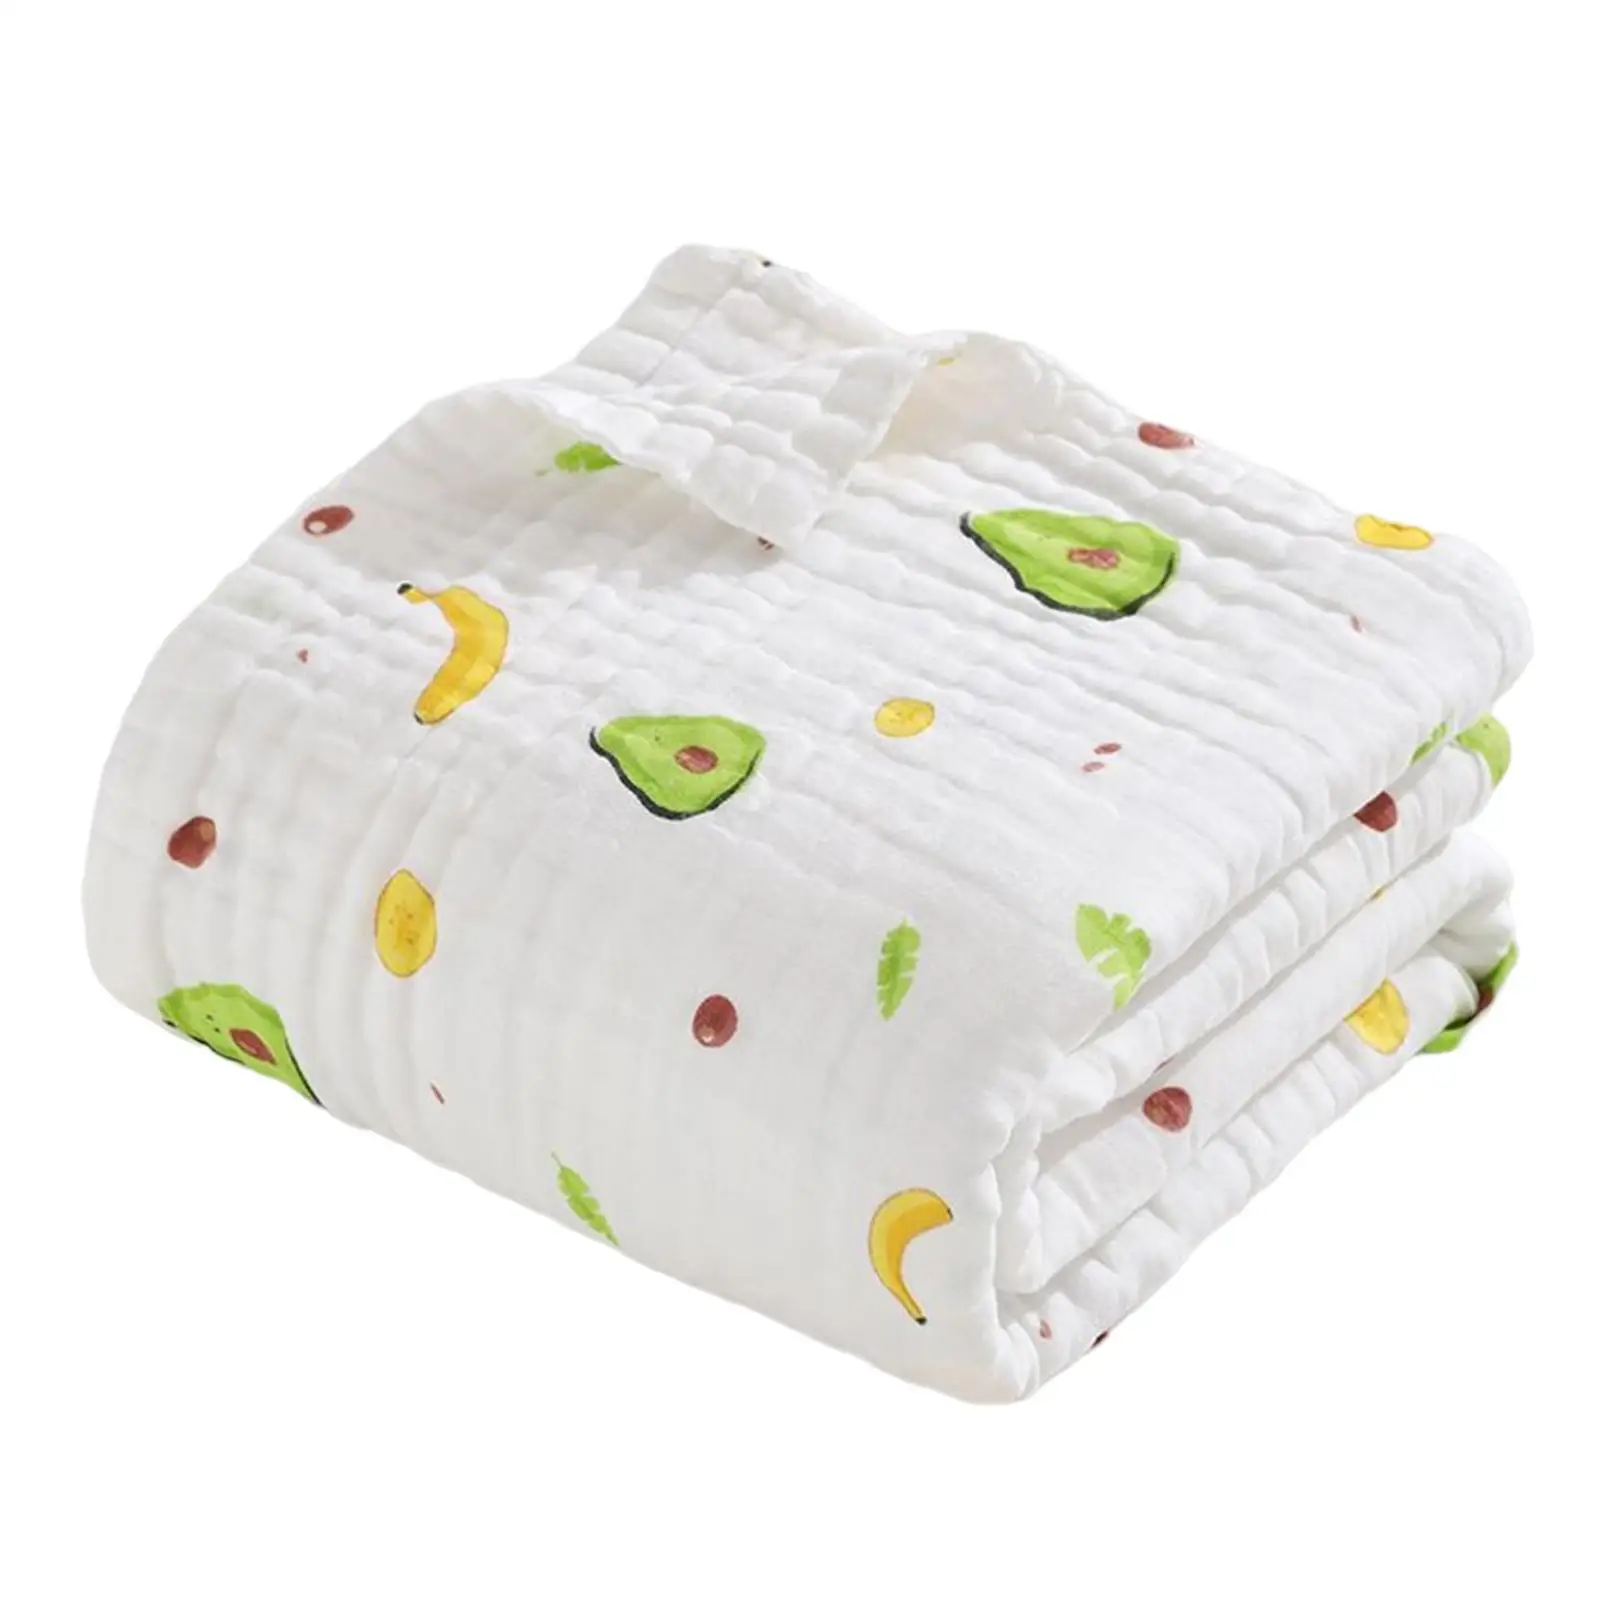 110x110cm bath Towel Gauze cotton Newborn Comfortable Square Infant Bath Sheet Swaddling Child Boys Girls Kids Blanket